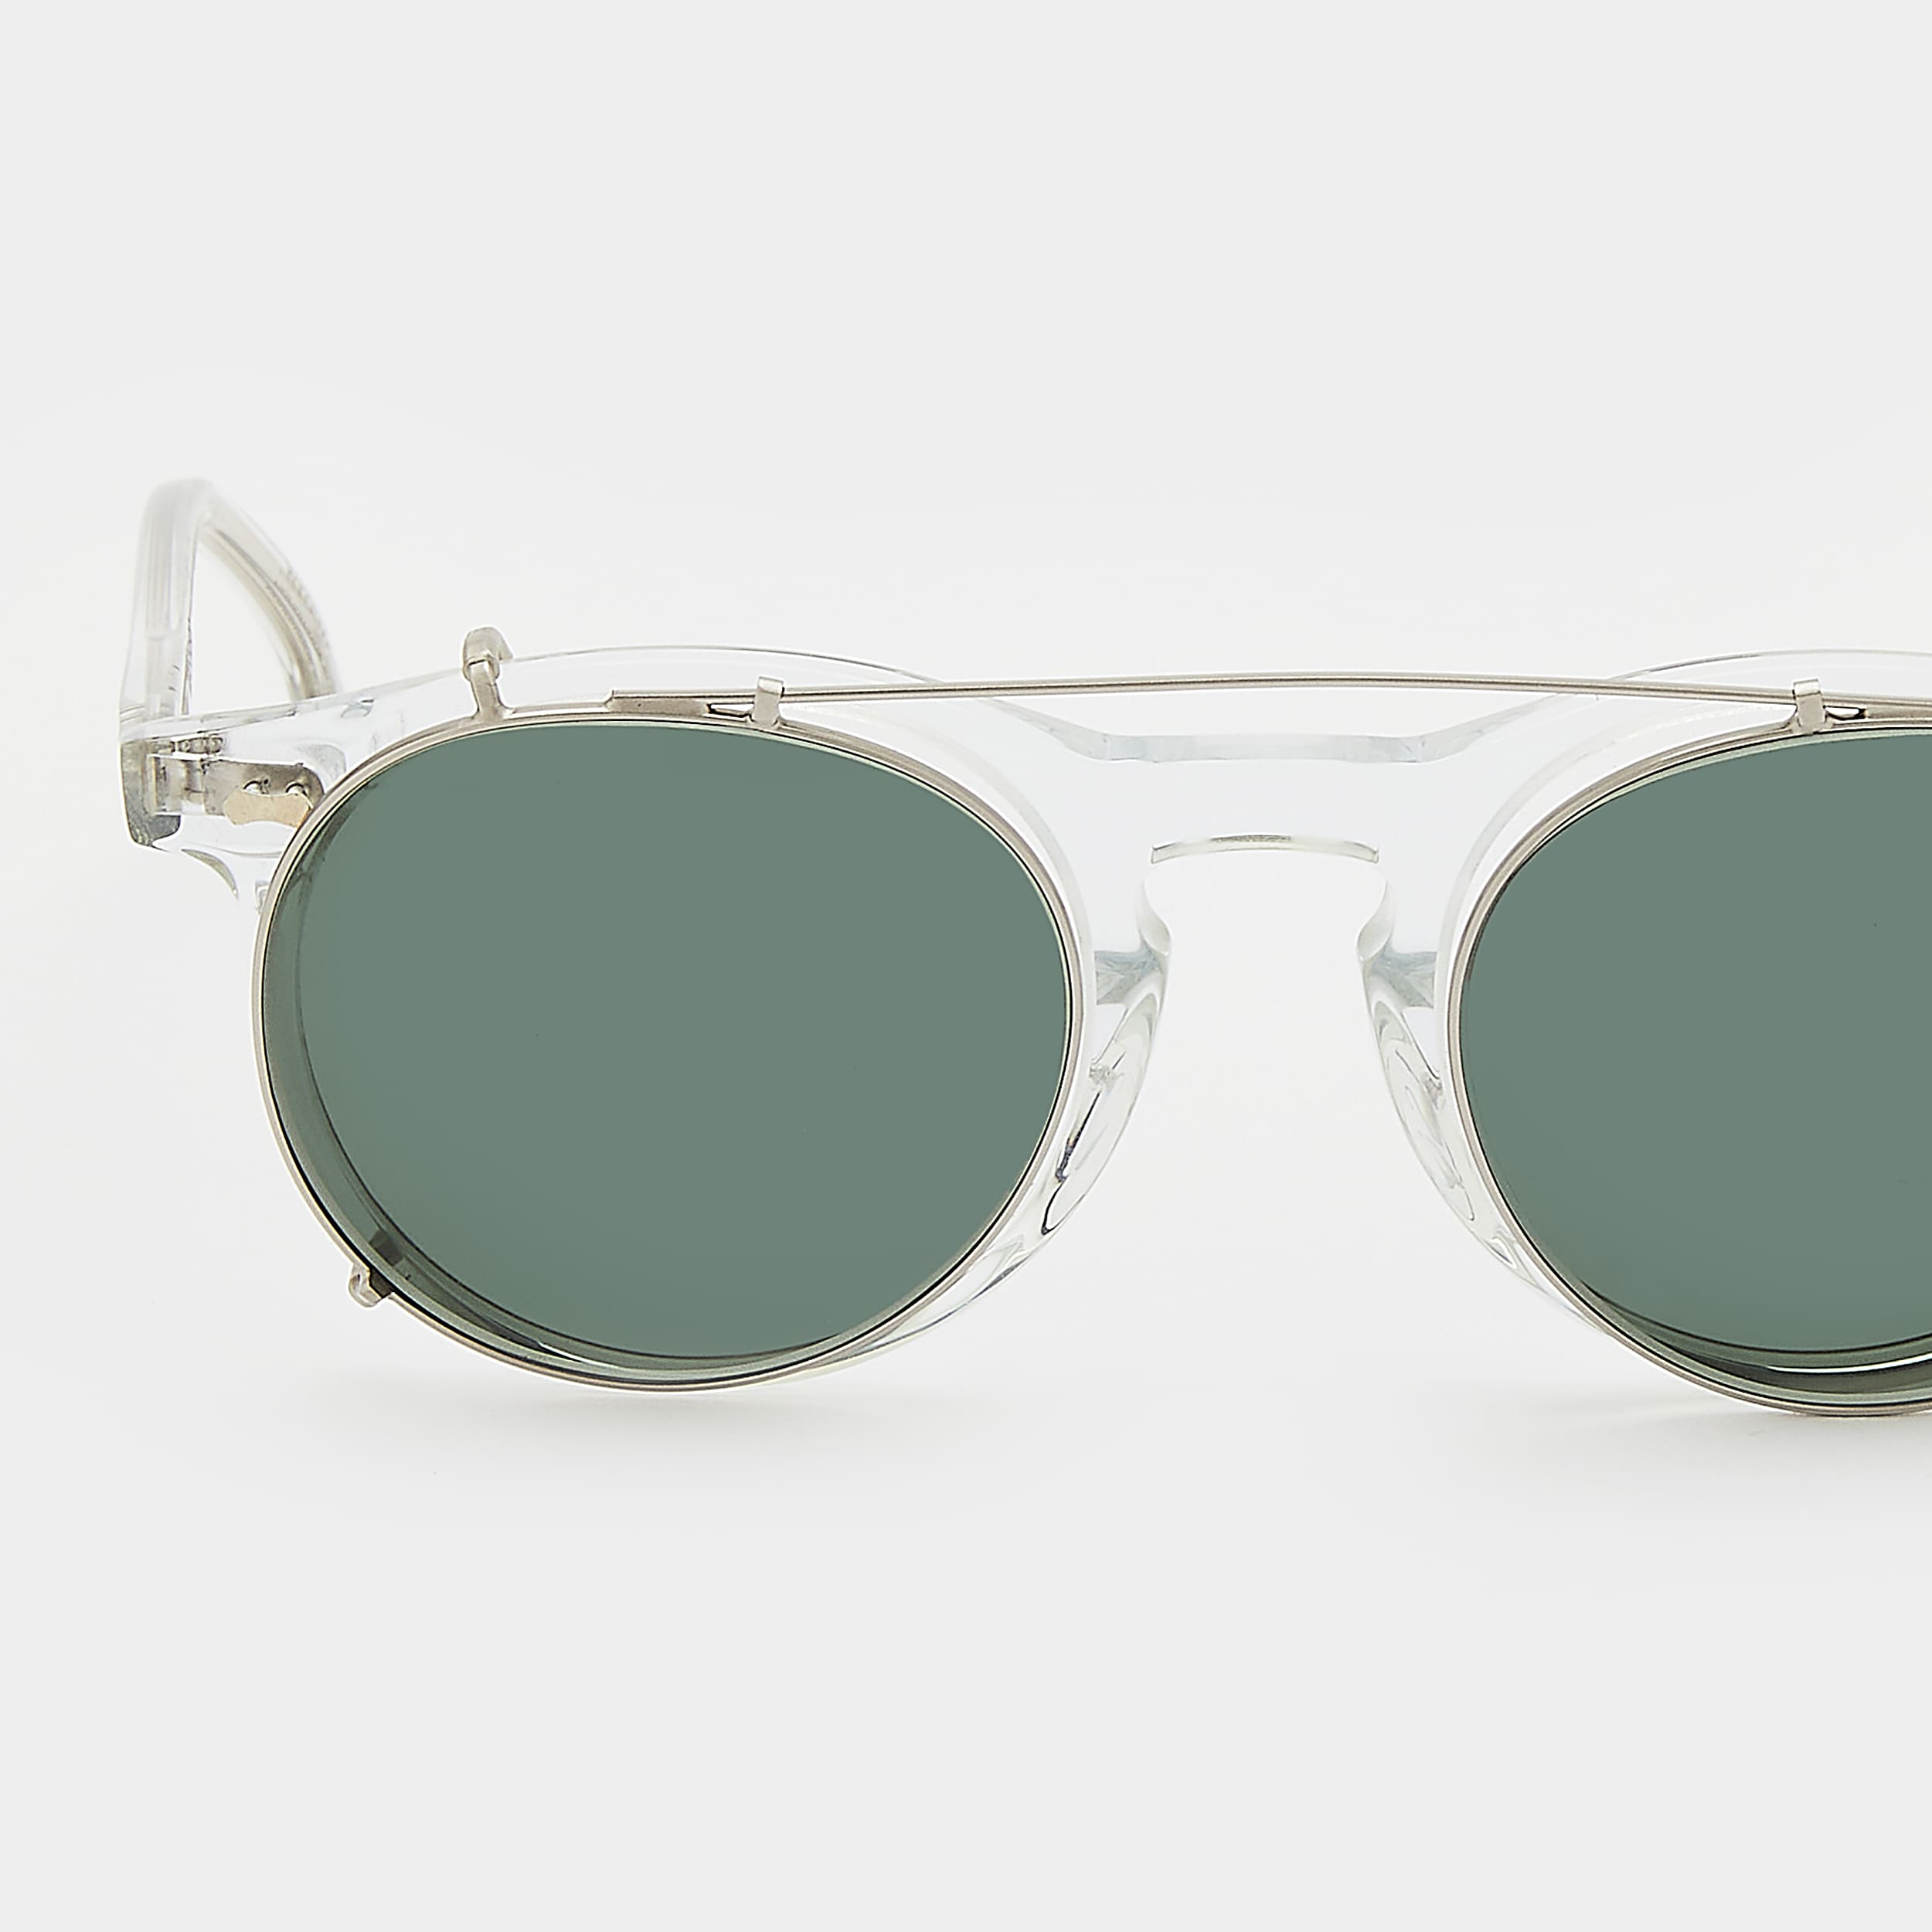 sunglasses-pleat-eco-transparent-silver-bottle-green-sustainable-tbd-eyewear-lens